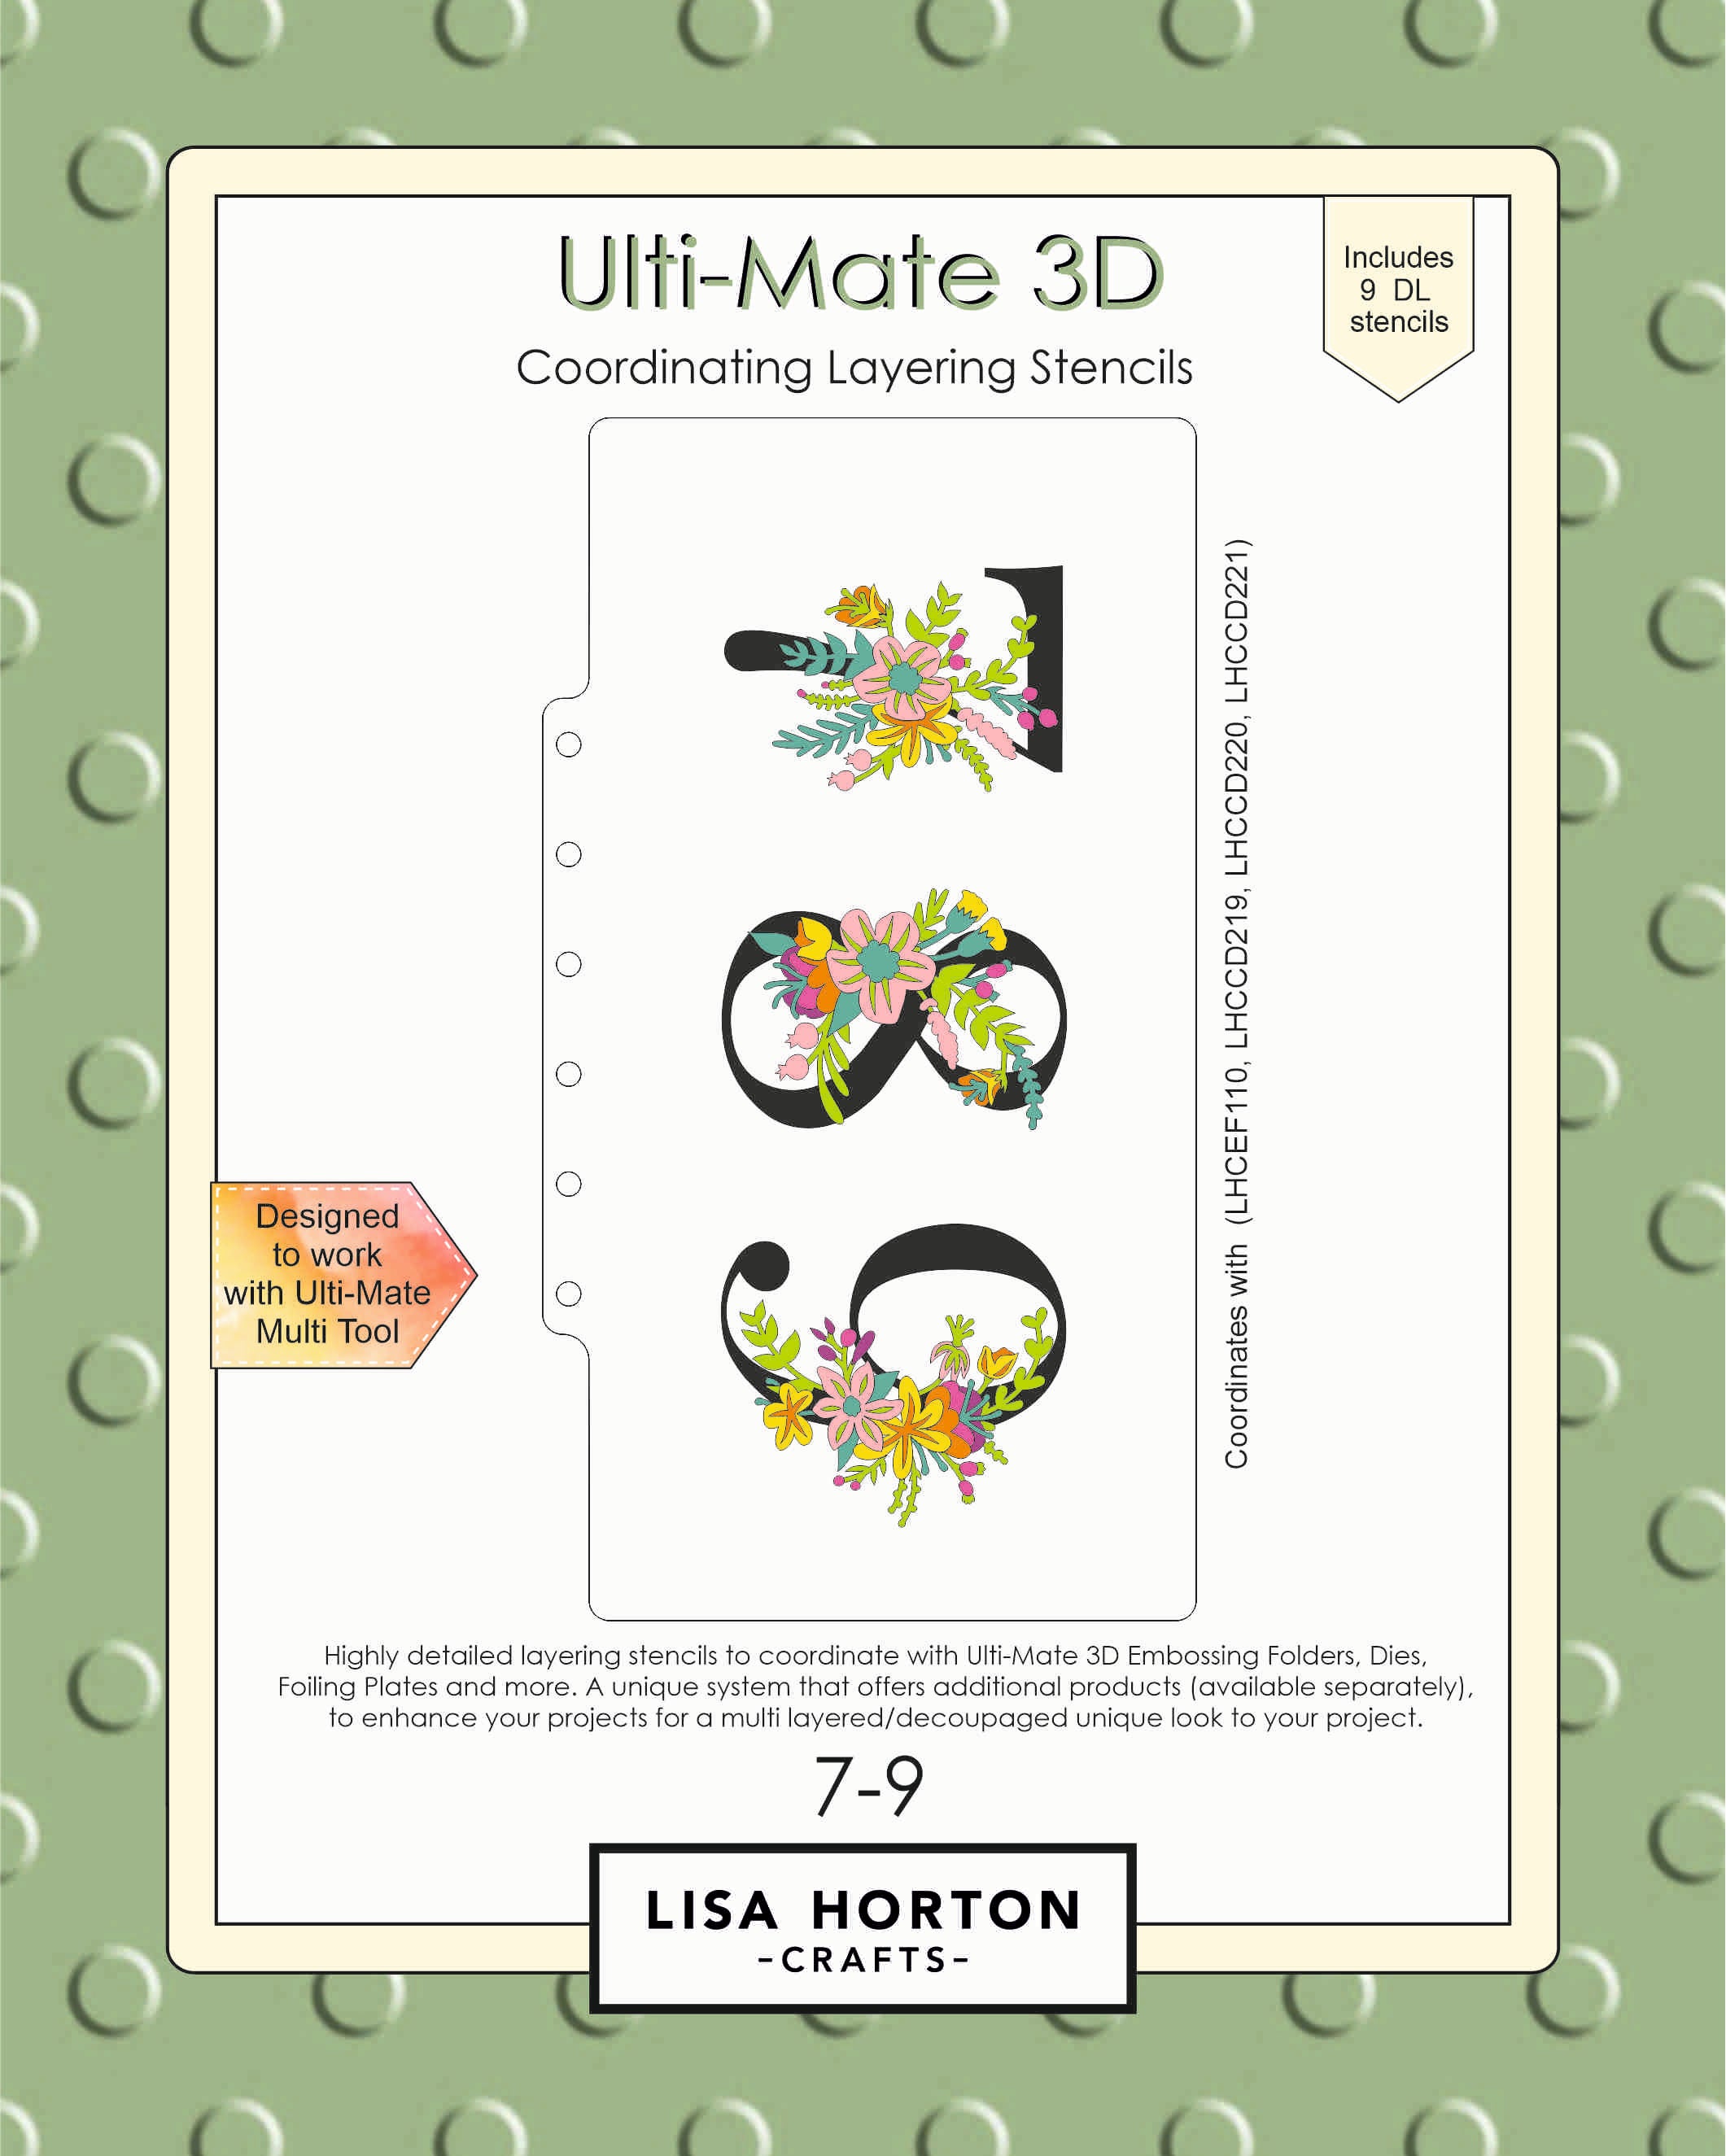 Lisa Horton Crafts Ulti-Mate 3D Slimline Layering Stencils 7-9